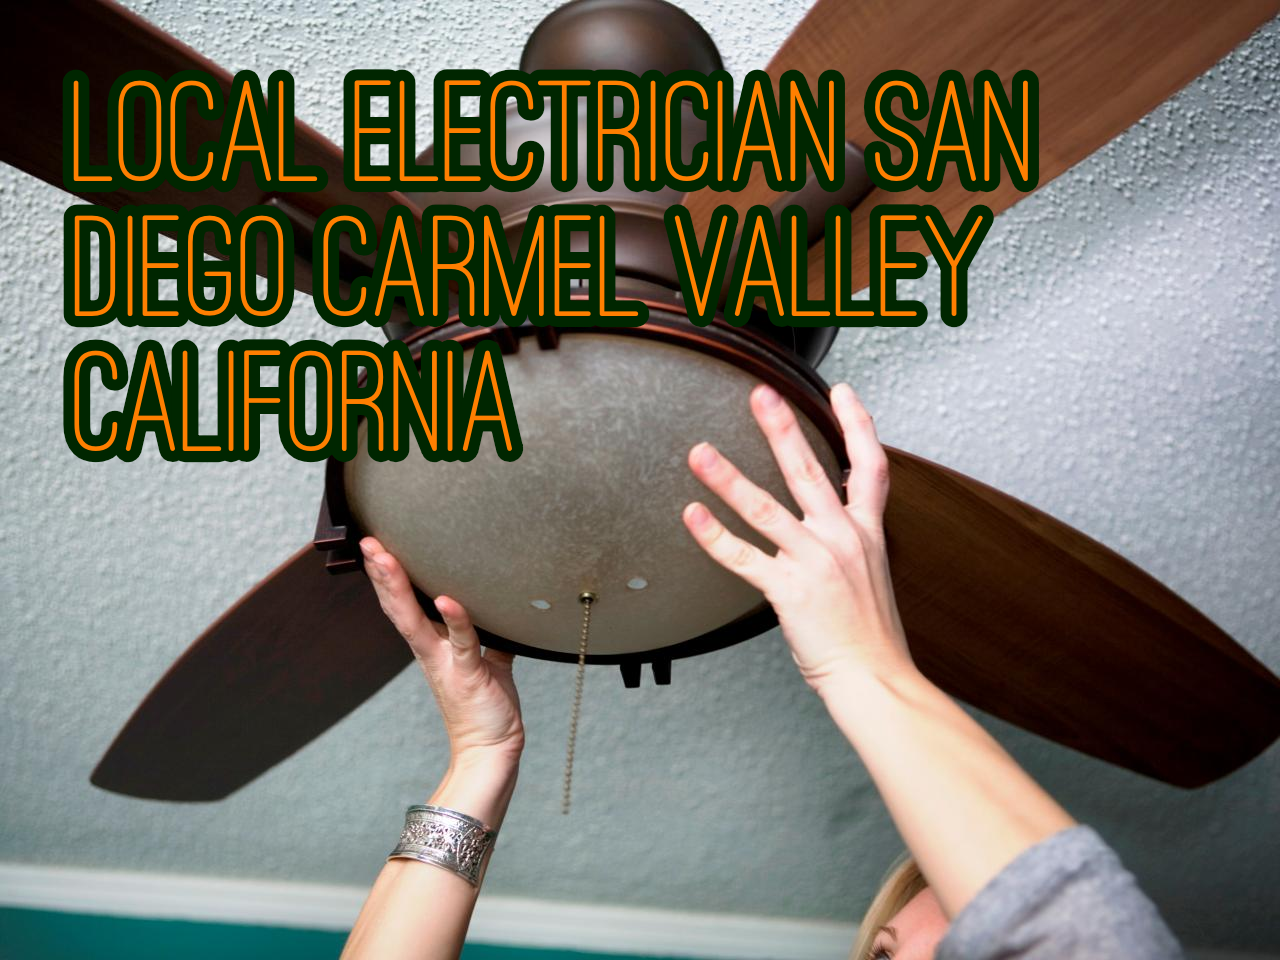 LOCAL ELECTRICIAN SAN DIEGO CARMEL VALLEY CALIFORNIA